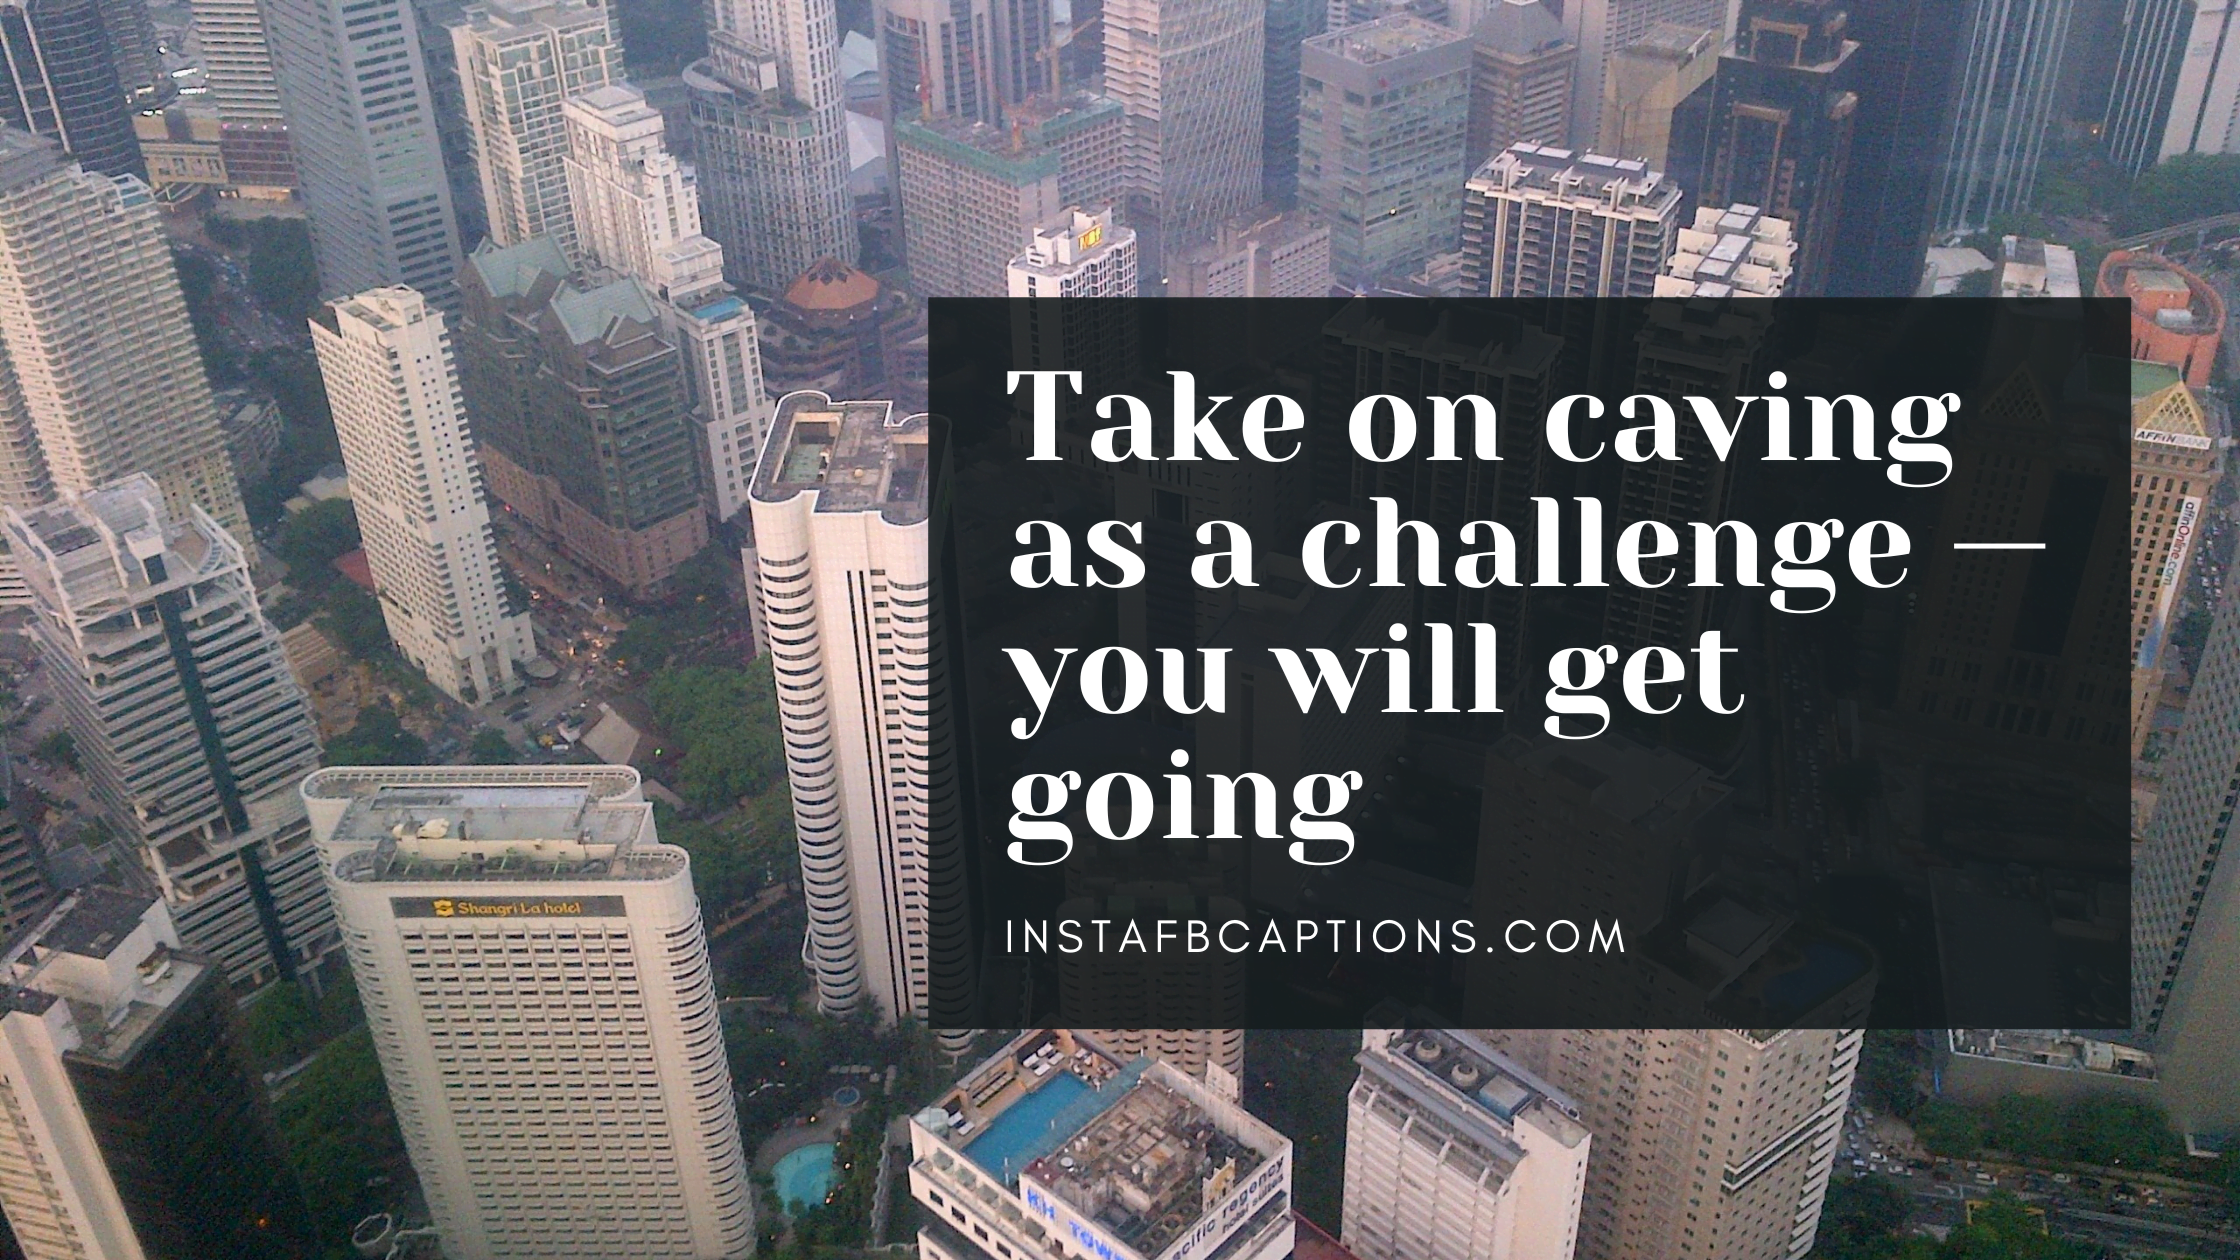 Kuala Lumpur Cave Captions  - Kuala Lumpur Cave Captions  - Kuala Lumpur in 150 Captivating Instagram Captions